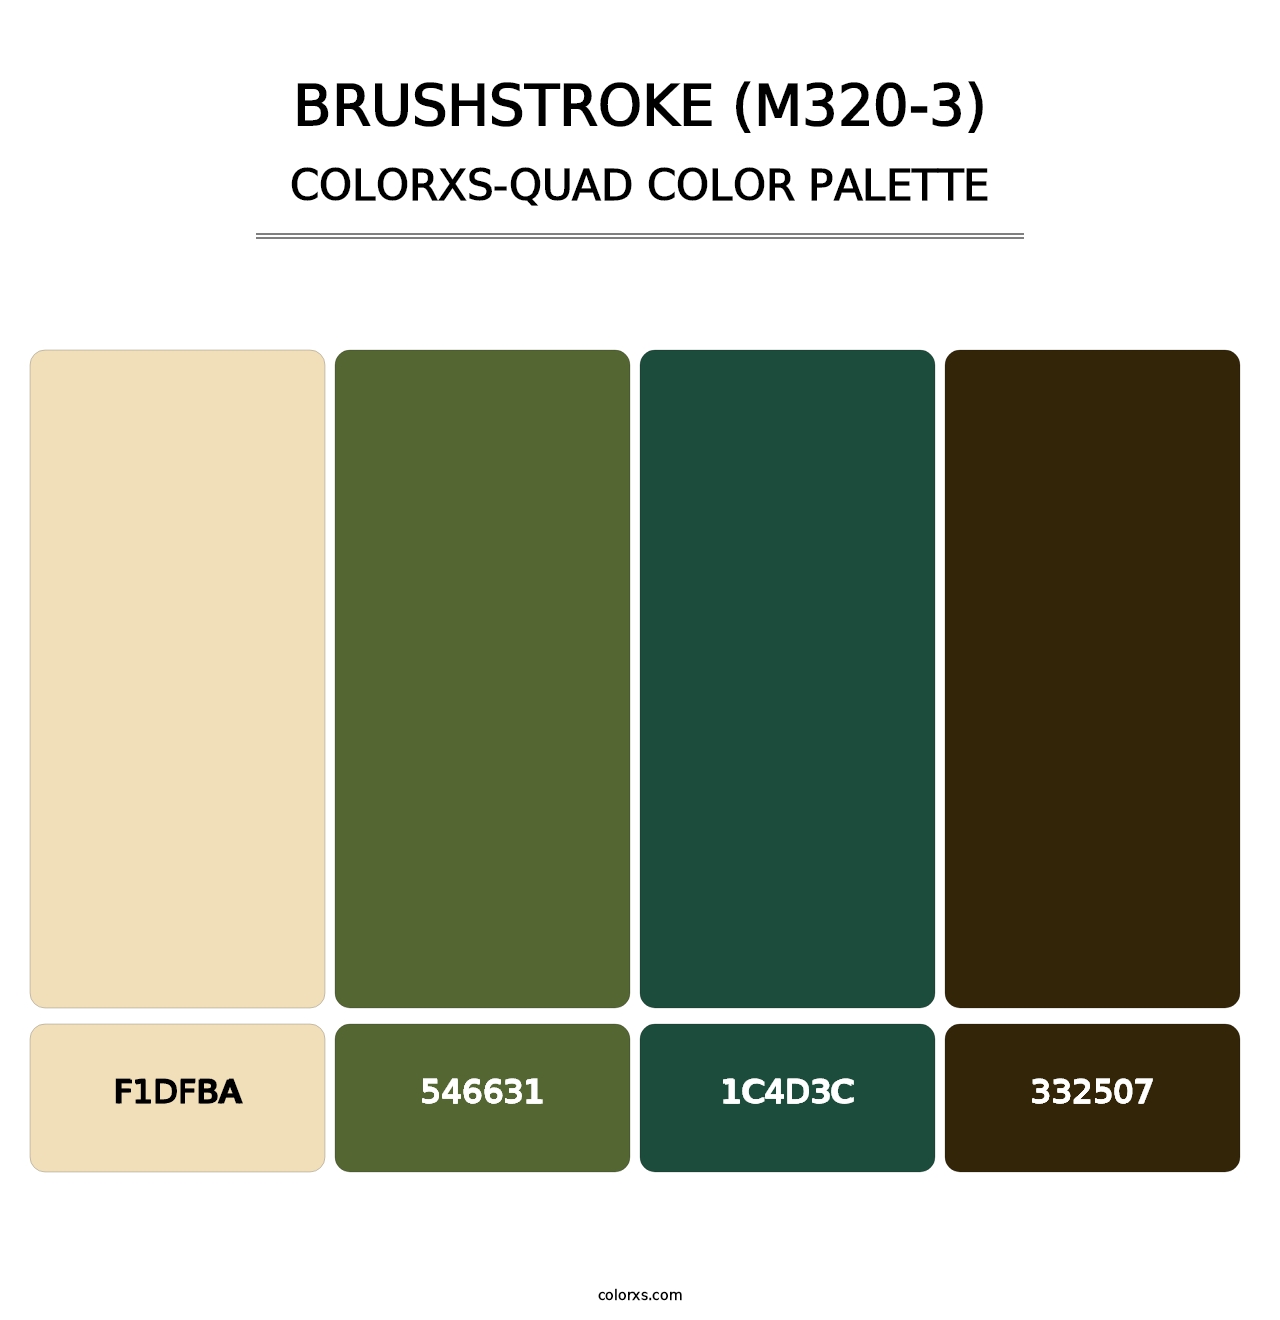 Brushstroke (M320-3) - Colorxs Quad Palette